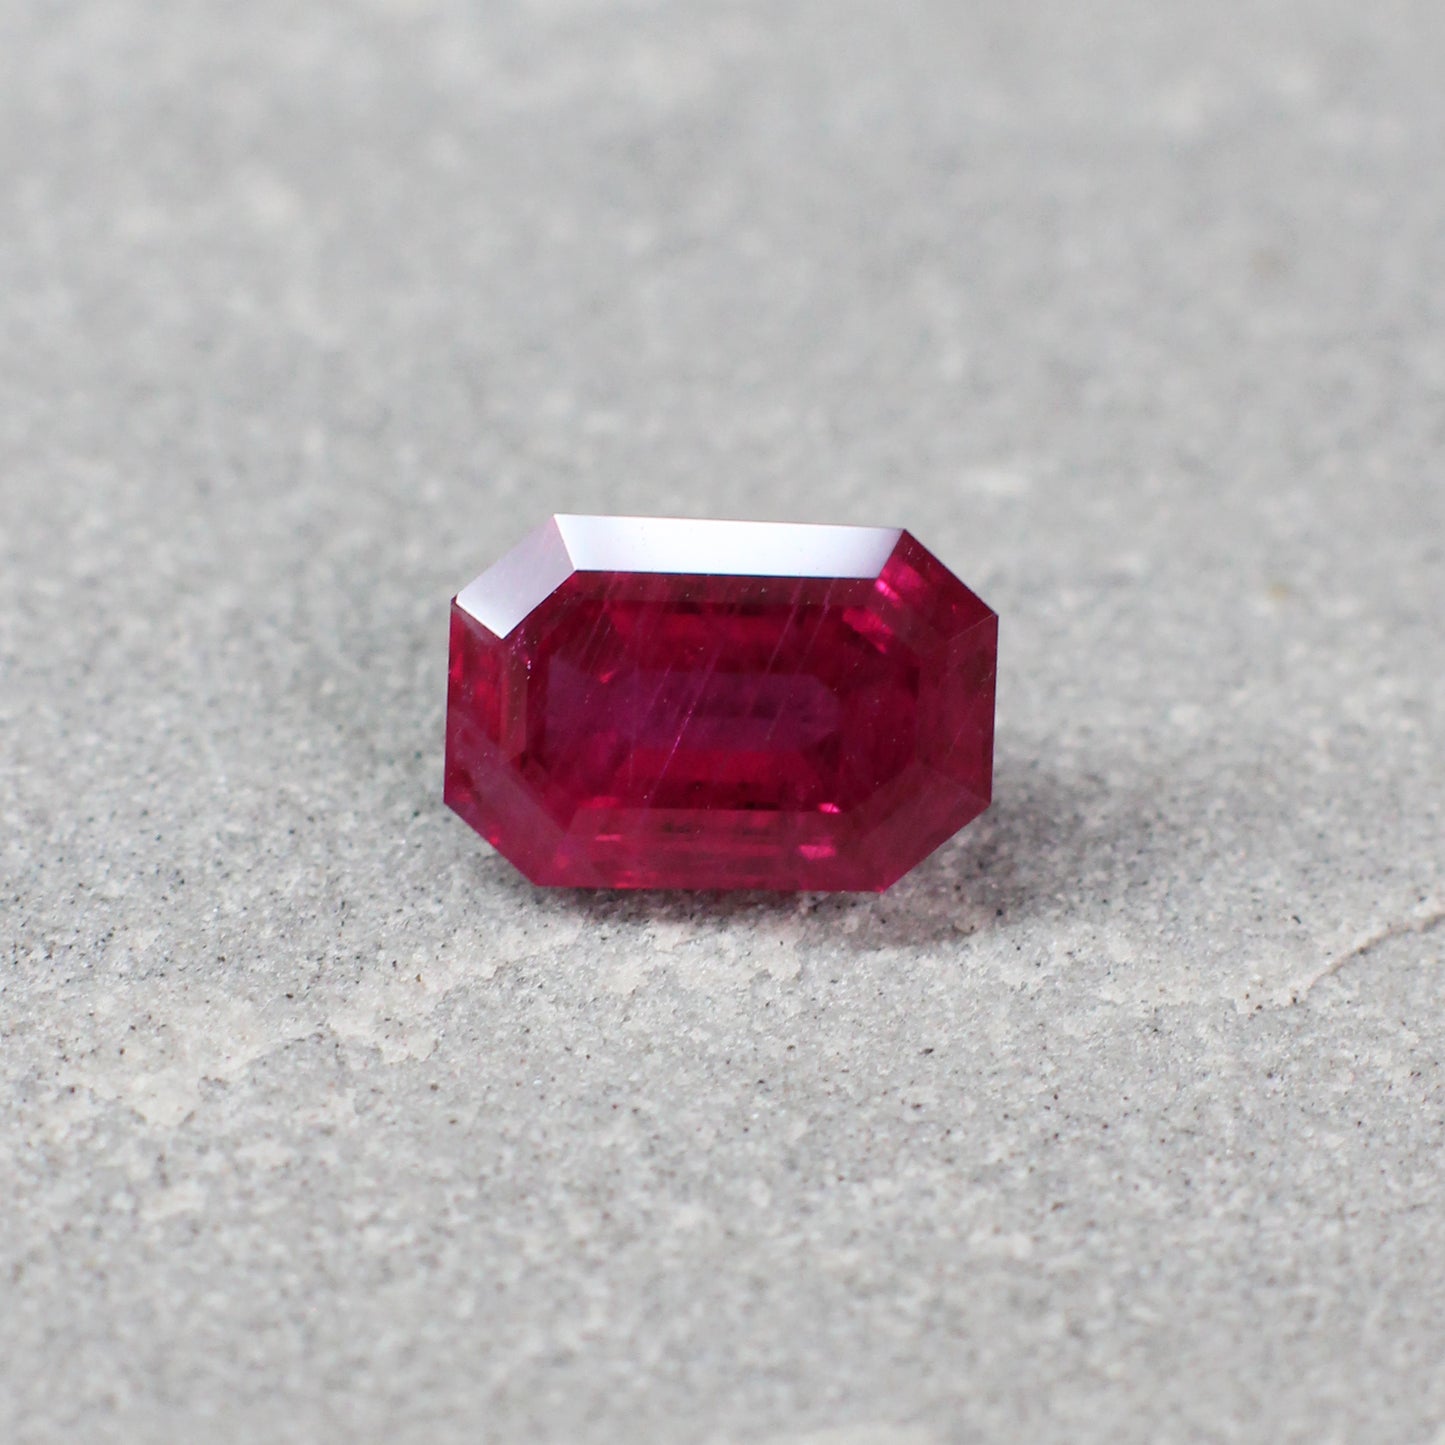 2.01ct Purplish Red, Octagon Ruby, H(a), Thailand - 8.41 x 5.71 x 4.03mm